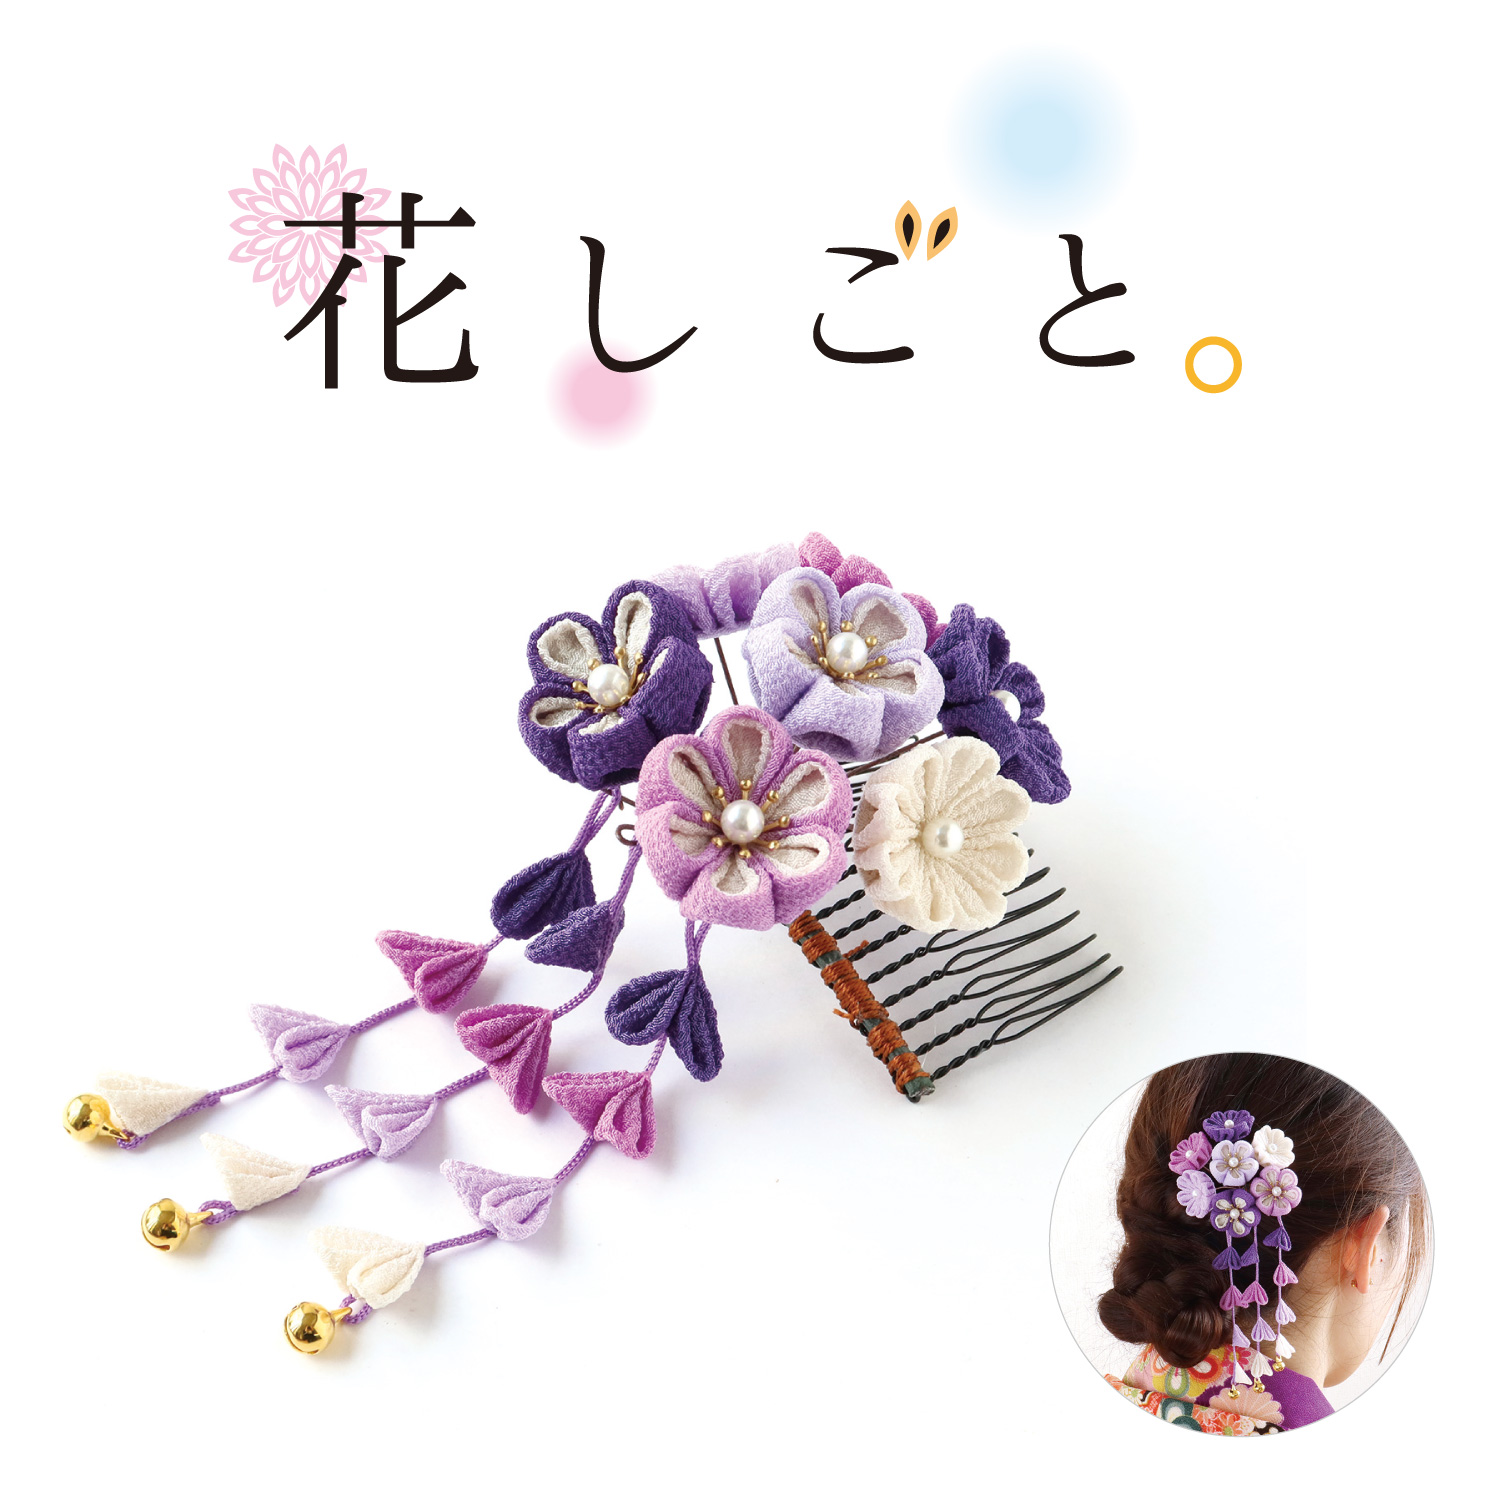 S50-9 つまみ細工キット「花しごと」29 藤紫の花束コーム (袋)「手芸